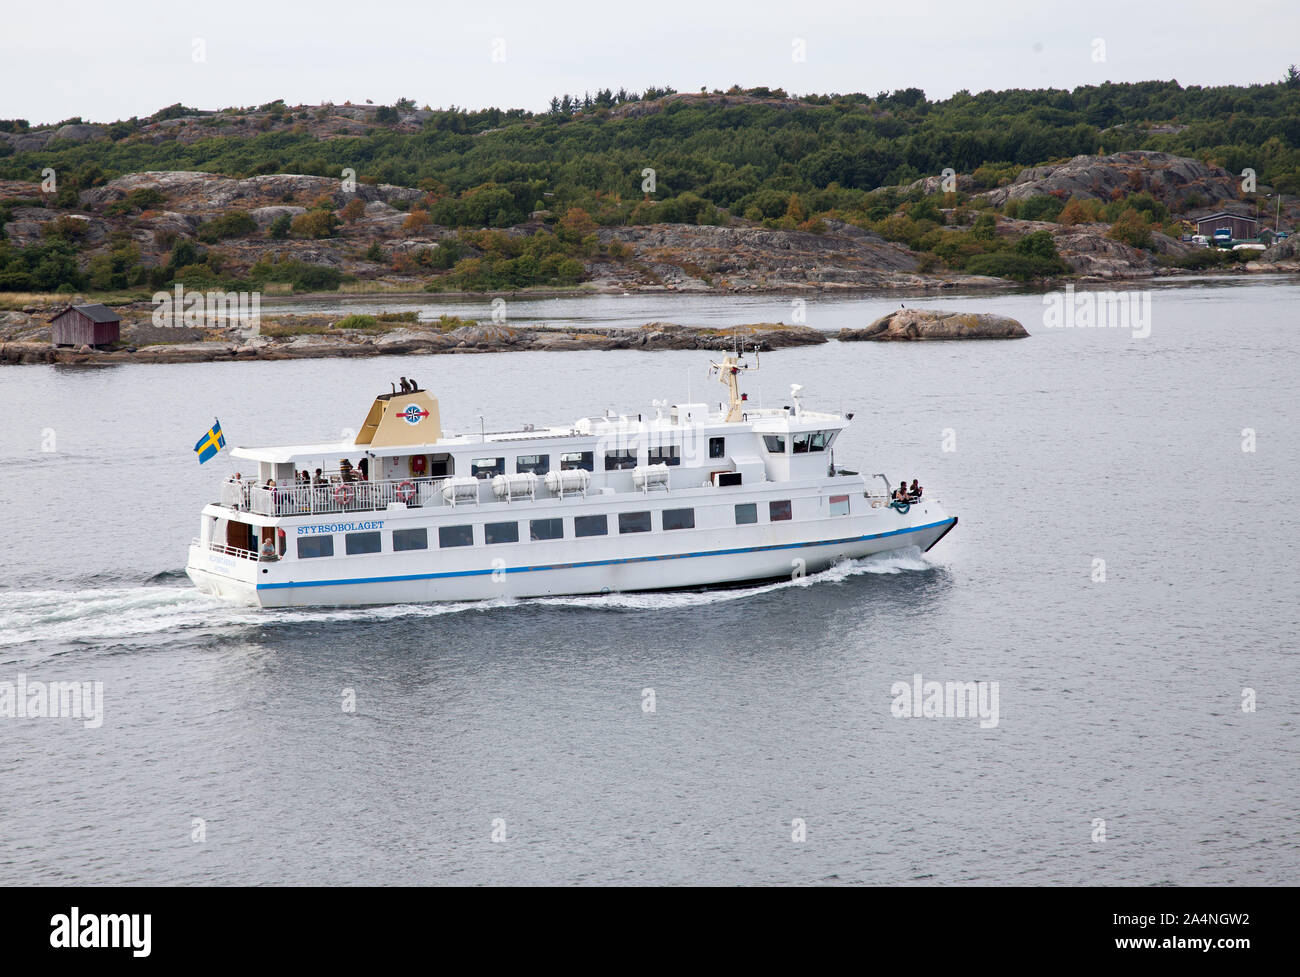 L'arcipelago di Göteborg. Nave passeggeri da Styrsöbolaget.Photo Jeppe Gustafsso Foto Stock